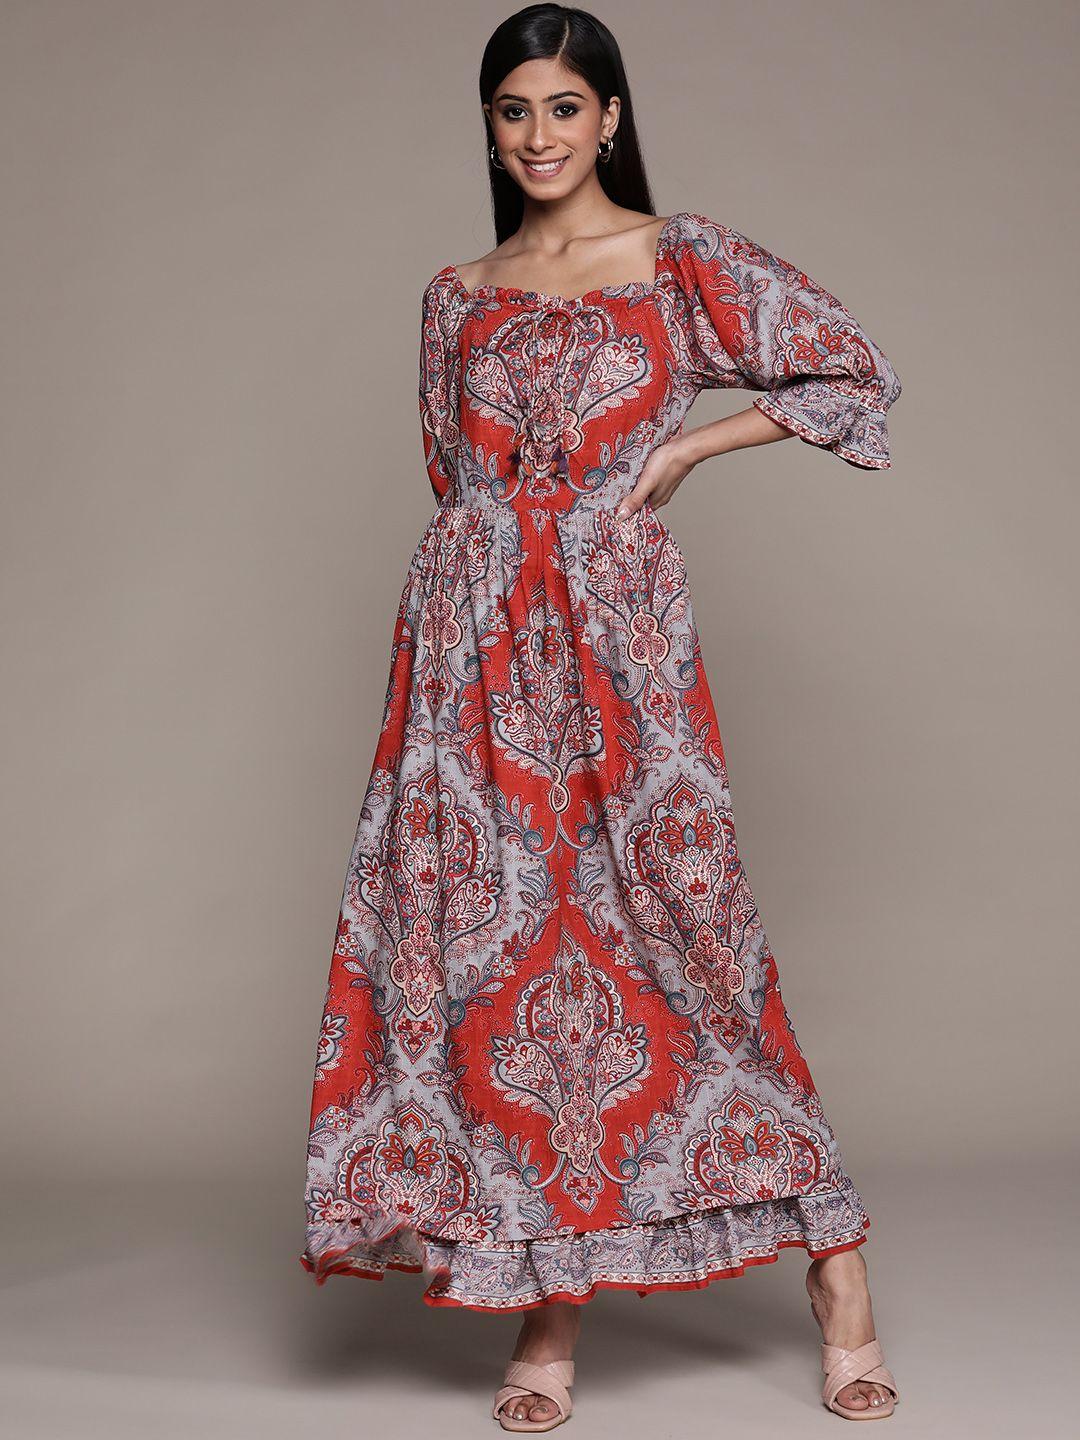 aarke-ritu-kumar-women-rust-red-&-blue-ethnic-motifs-a-line-maxi-dress